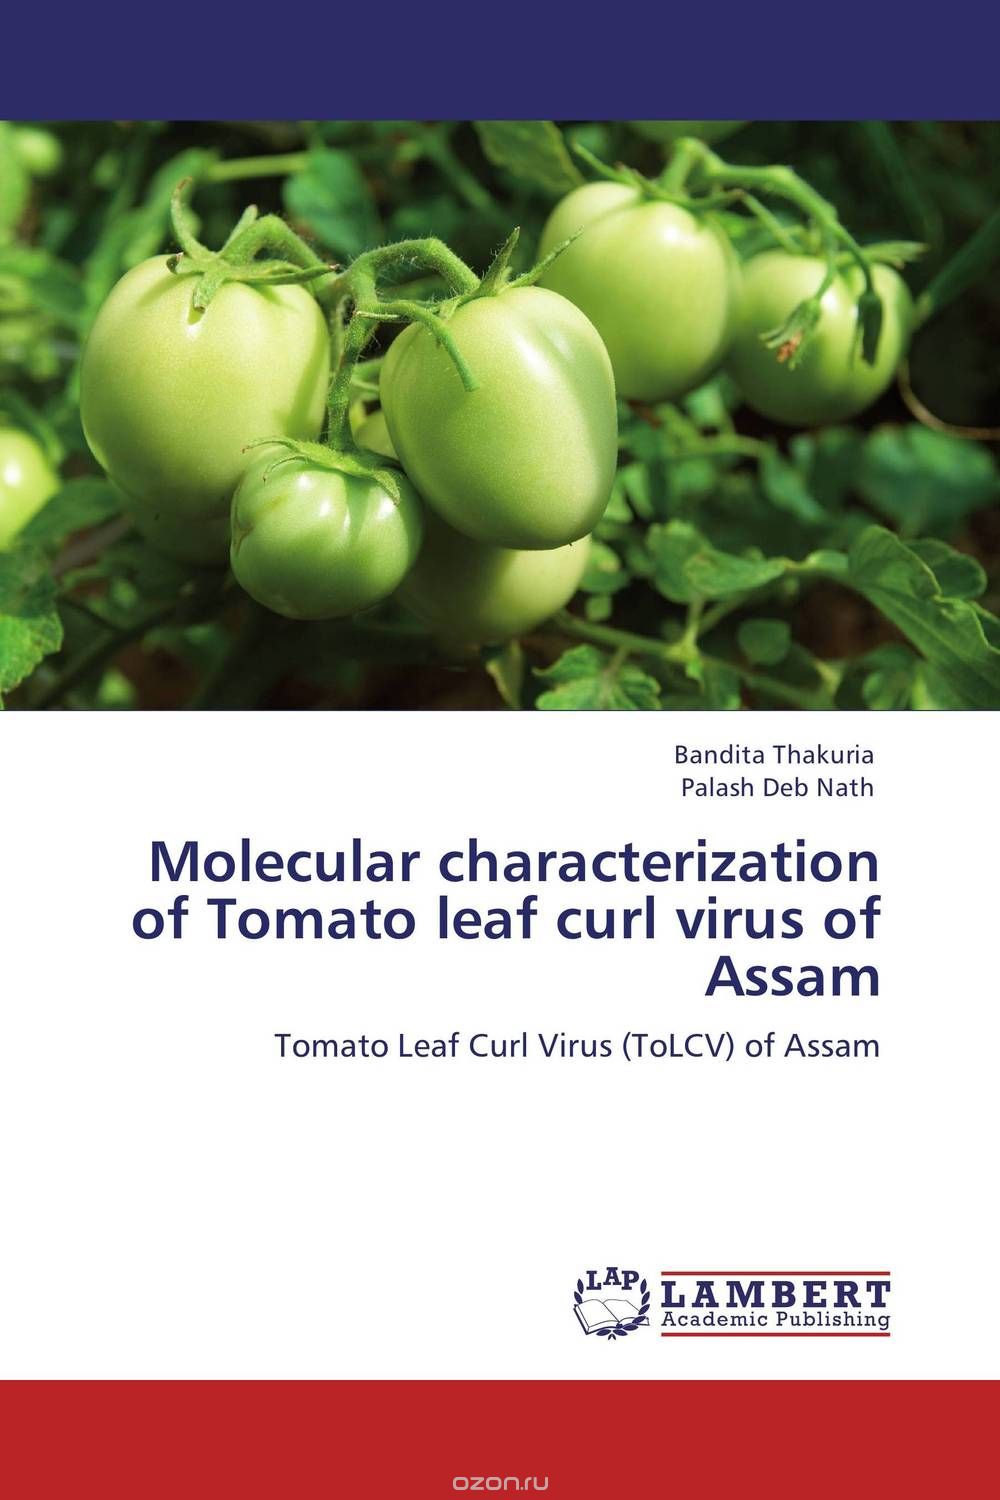 Скачать книгу "Molecular characterization of Tomato leaf curl virus of Assam"